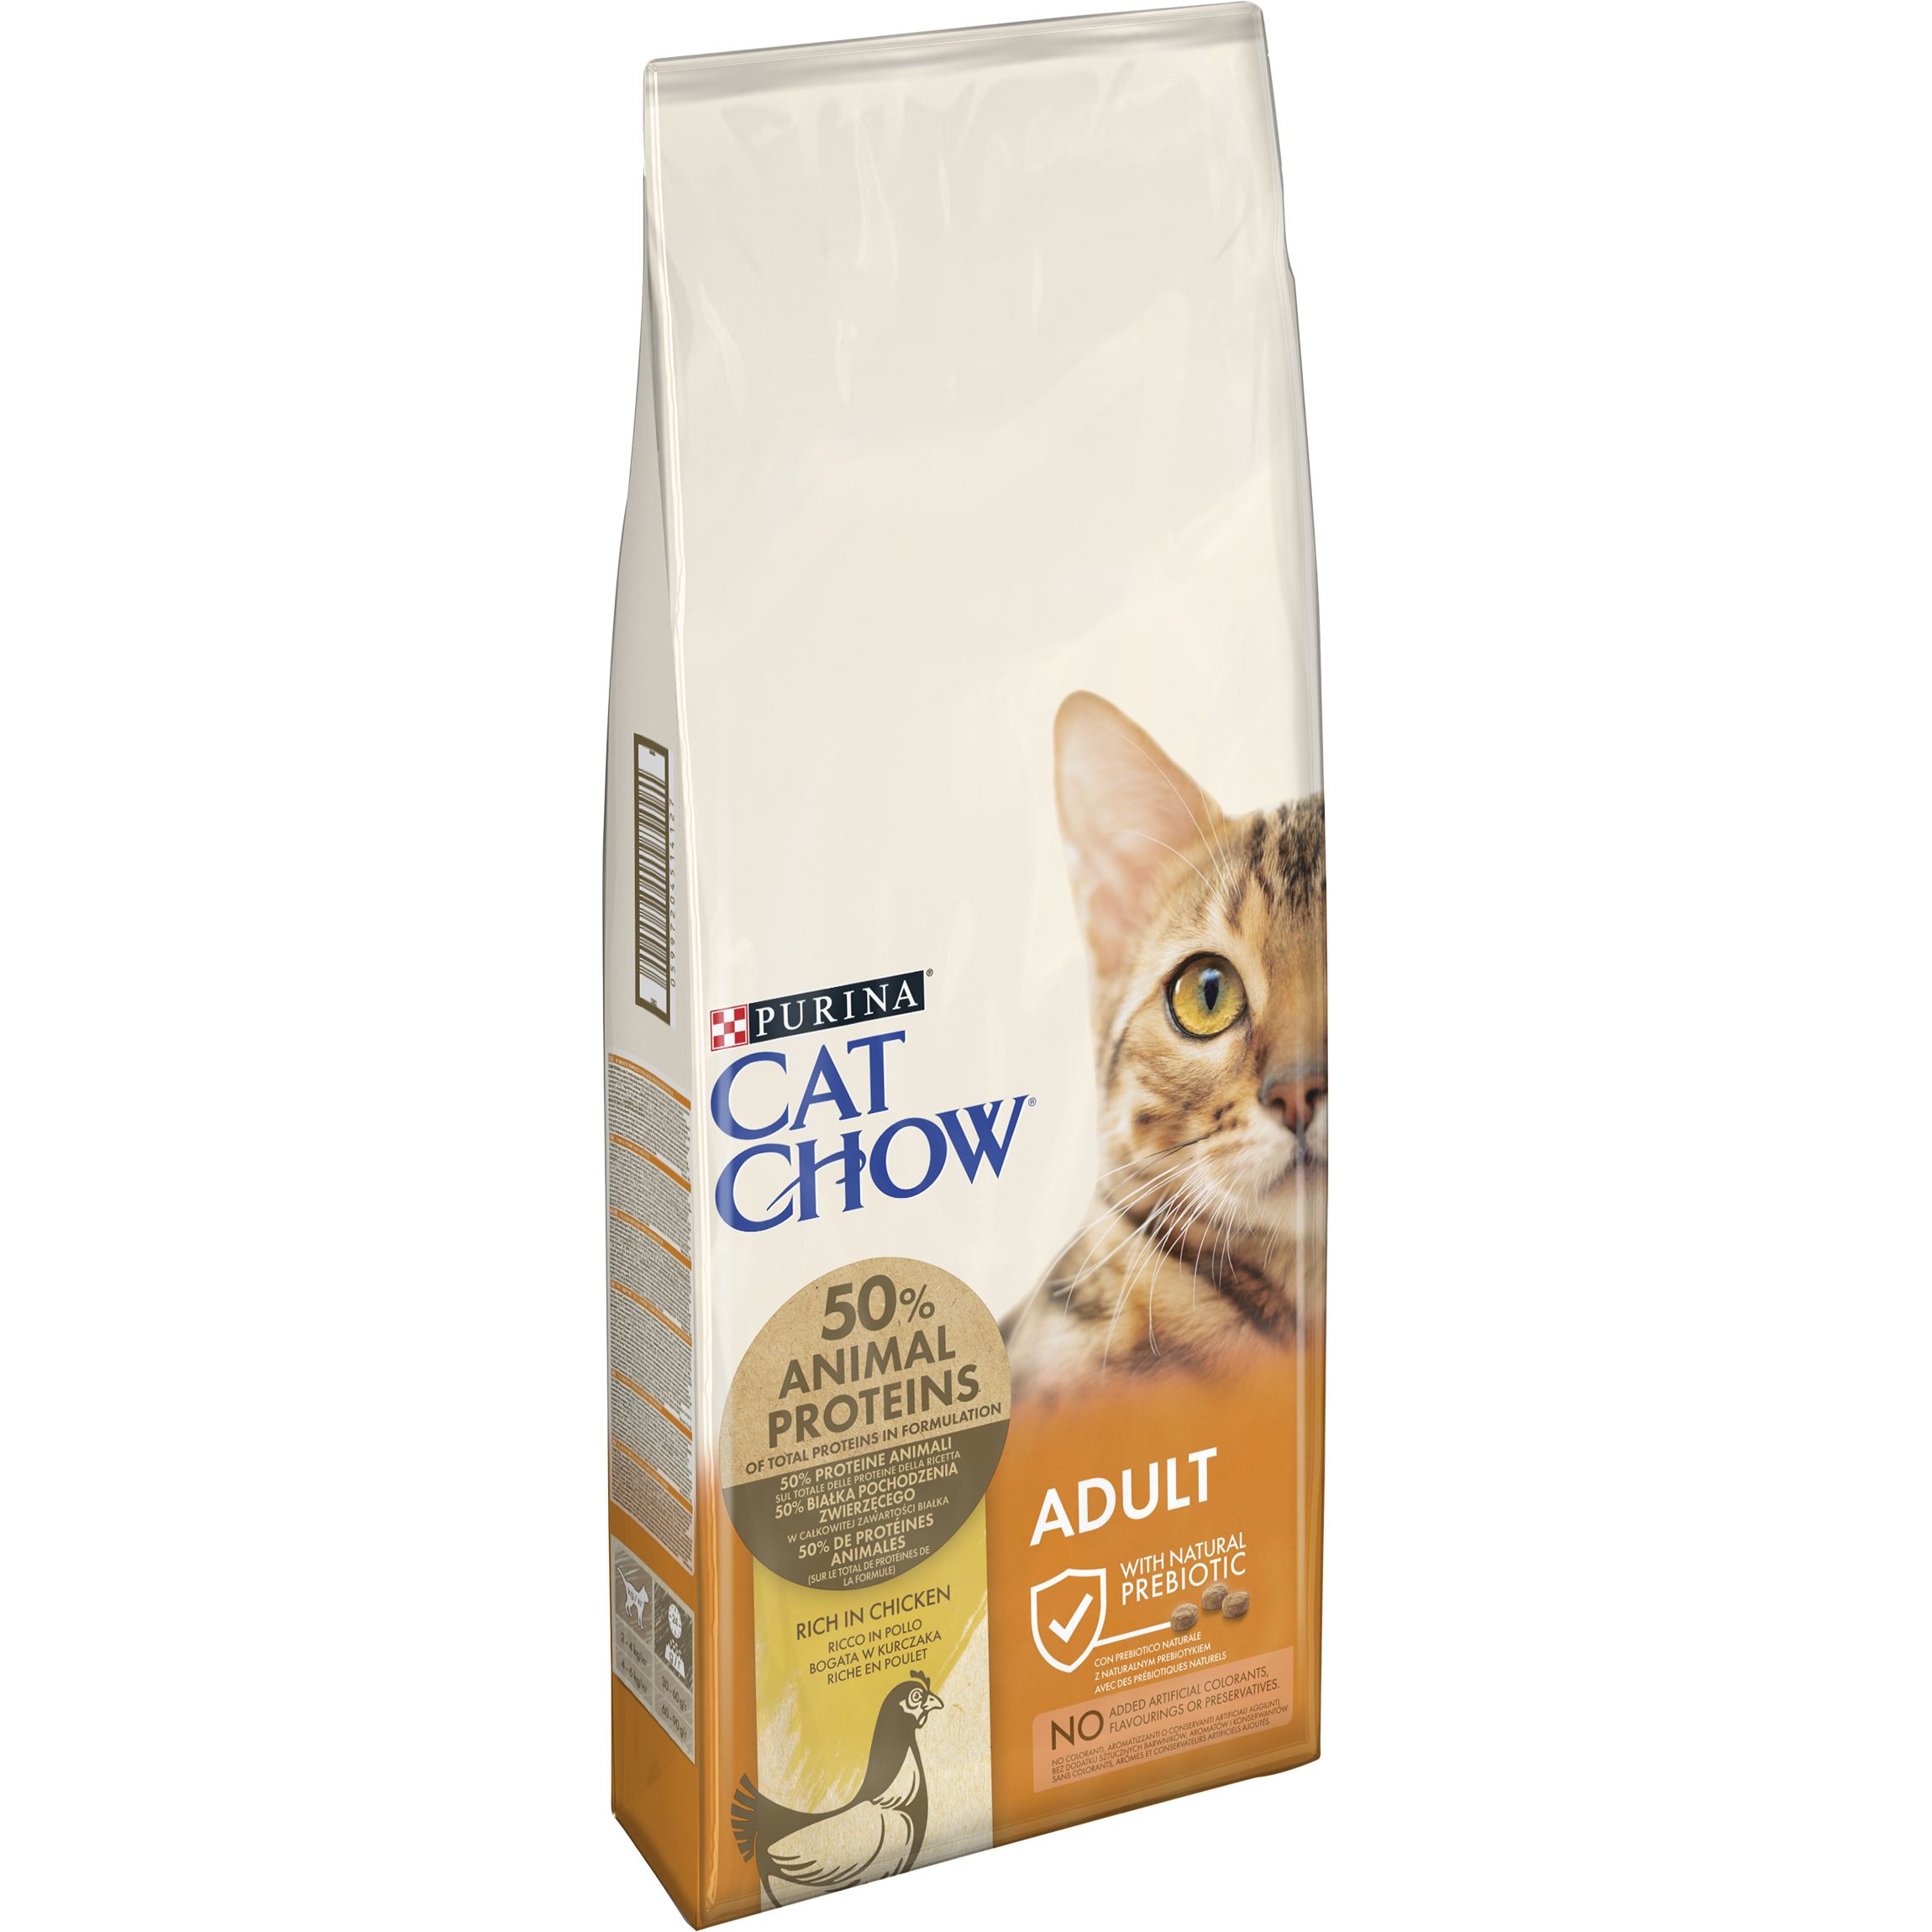 Сухой корм для кошек Cat Chow Adult с курицей 15 кг - фото 3